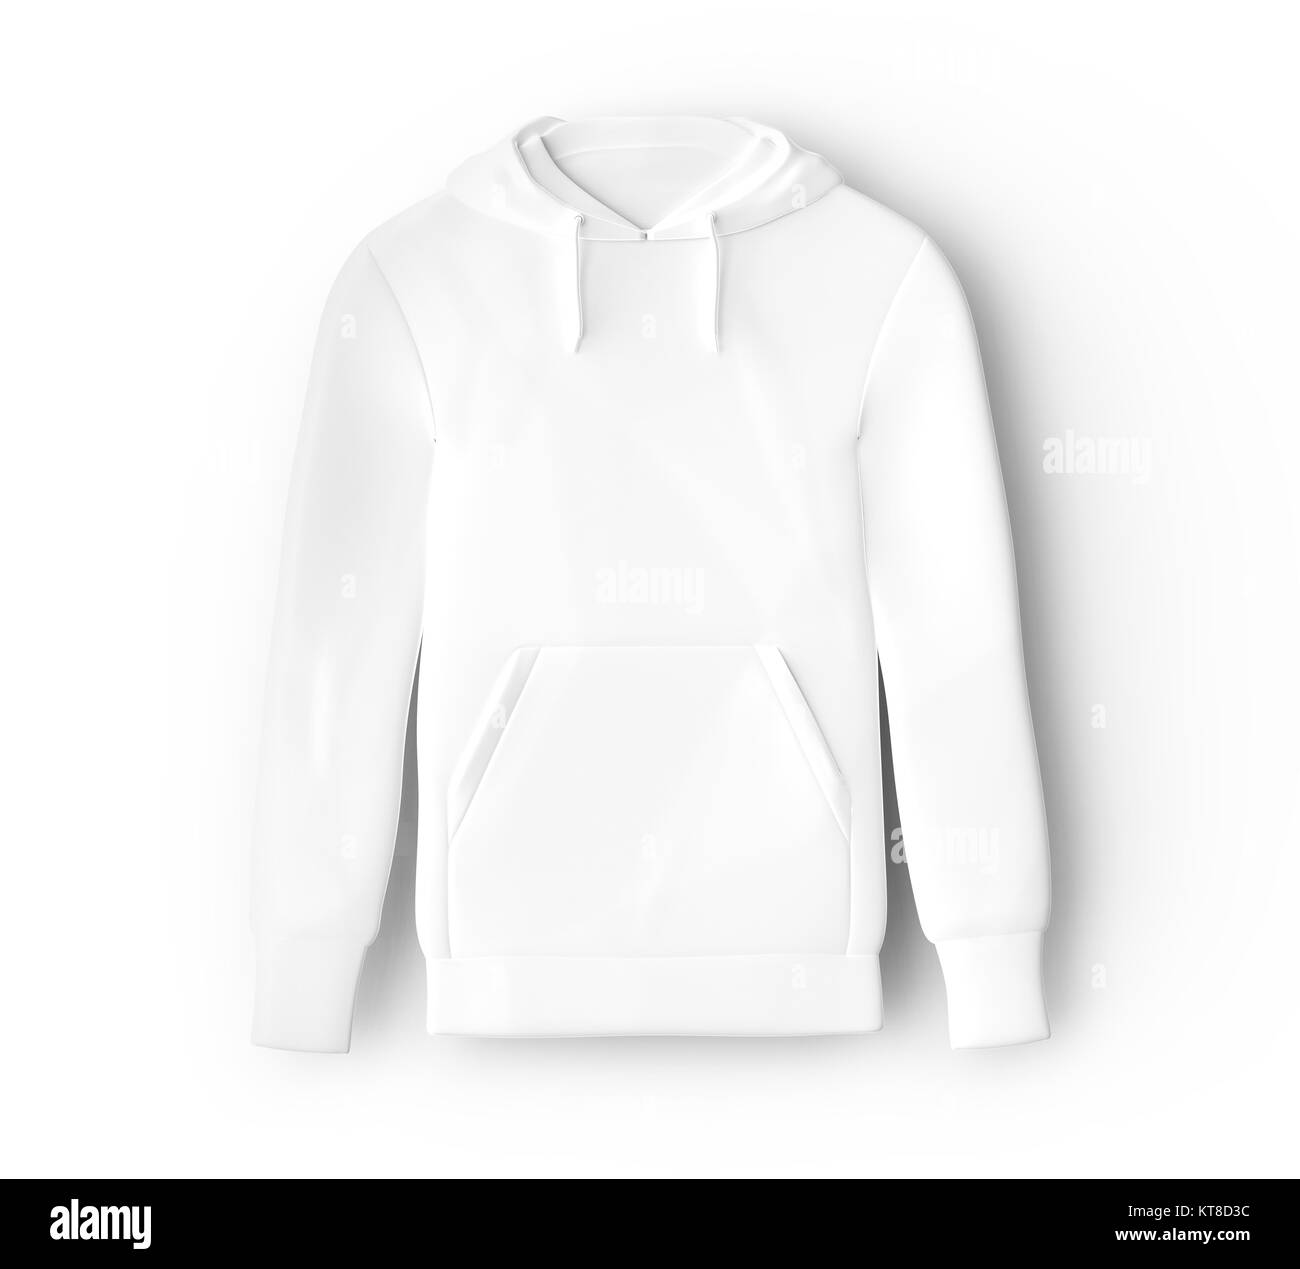 Download Hoodie sweatshirt mockup, blank white cloth template for ...